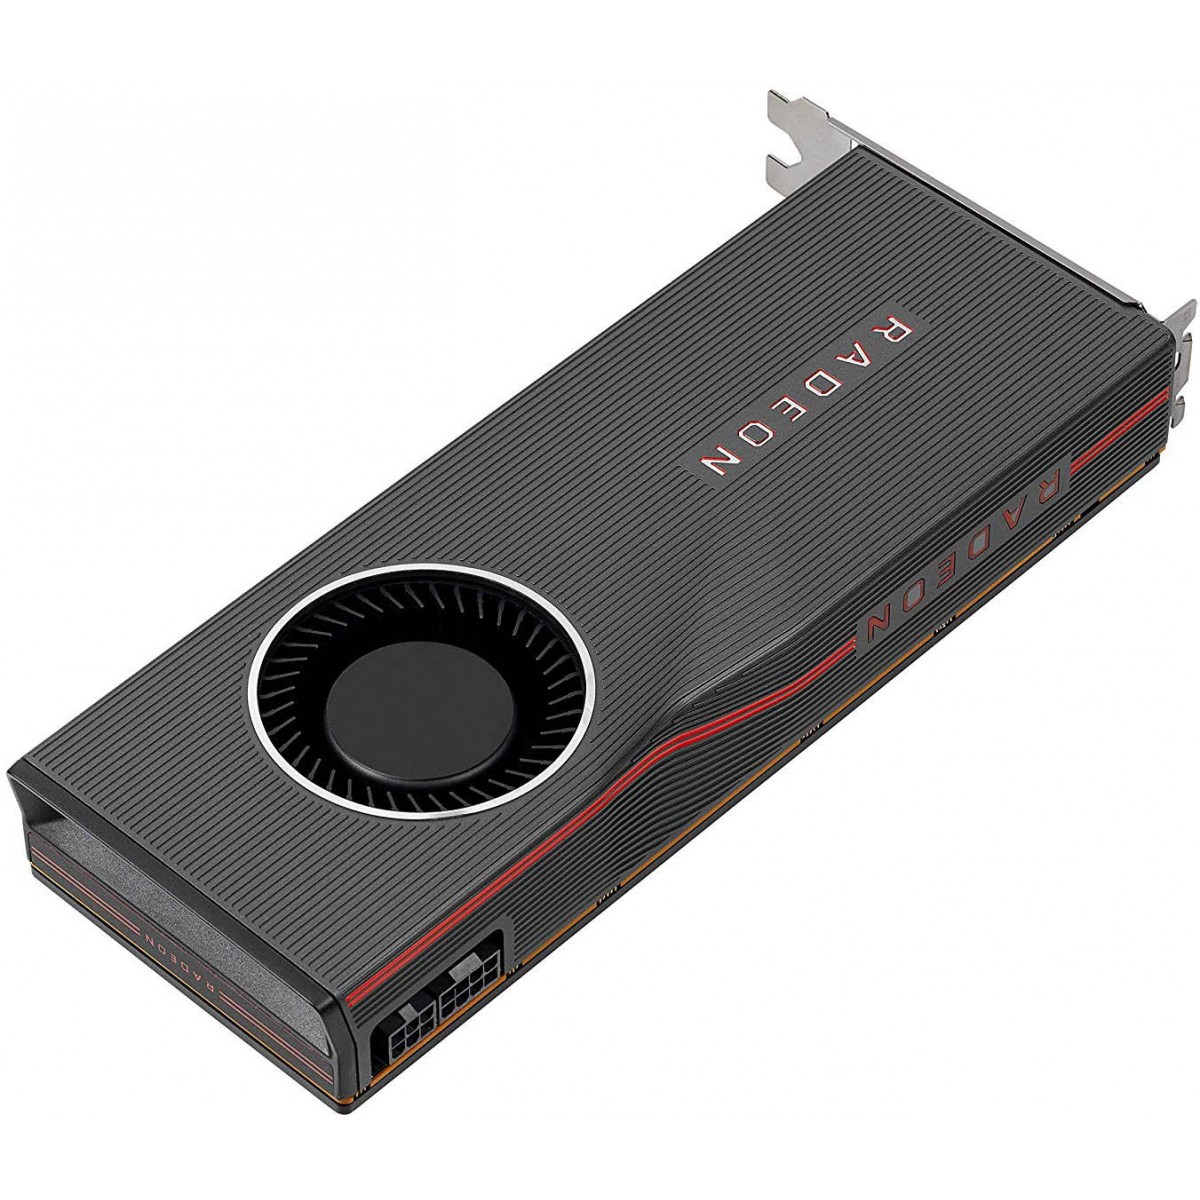 Placa de Vídeo Asus Radeon Navi RX 5700 XT, 8GB GDDR6, 256Bit, RX5700XT-8G